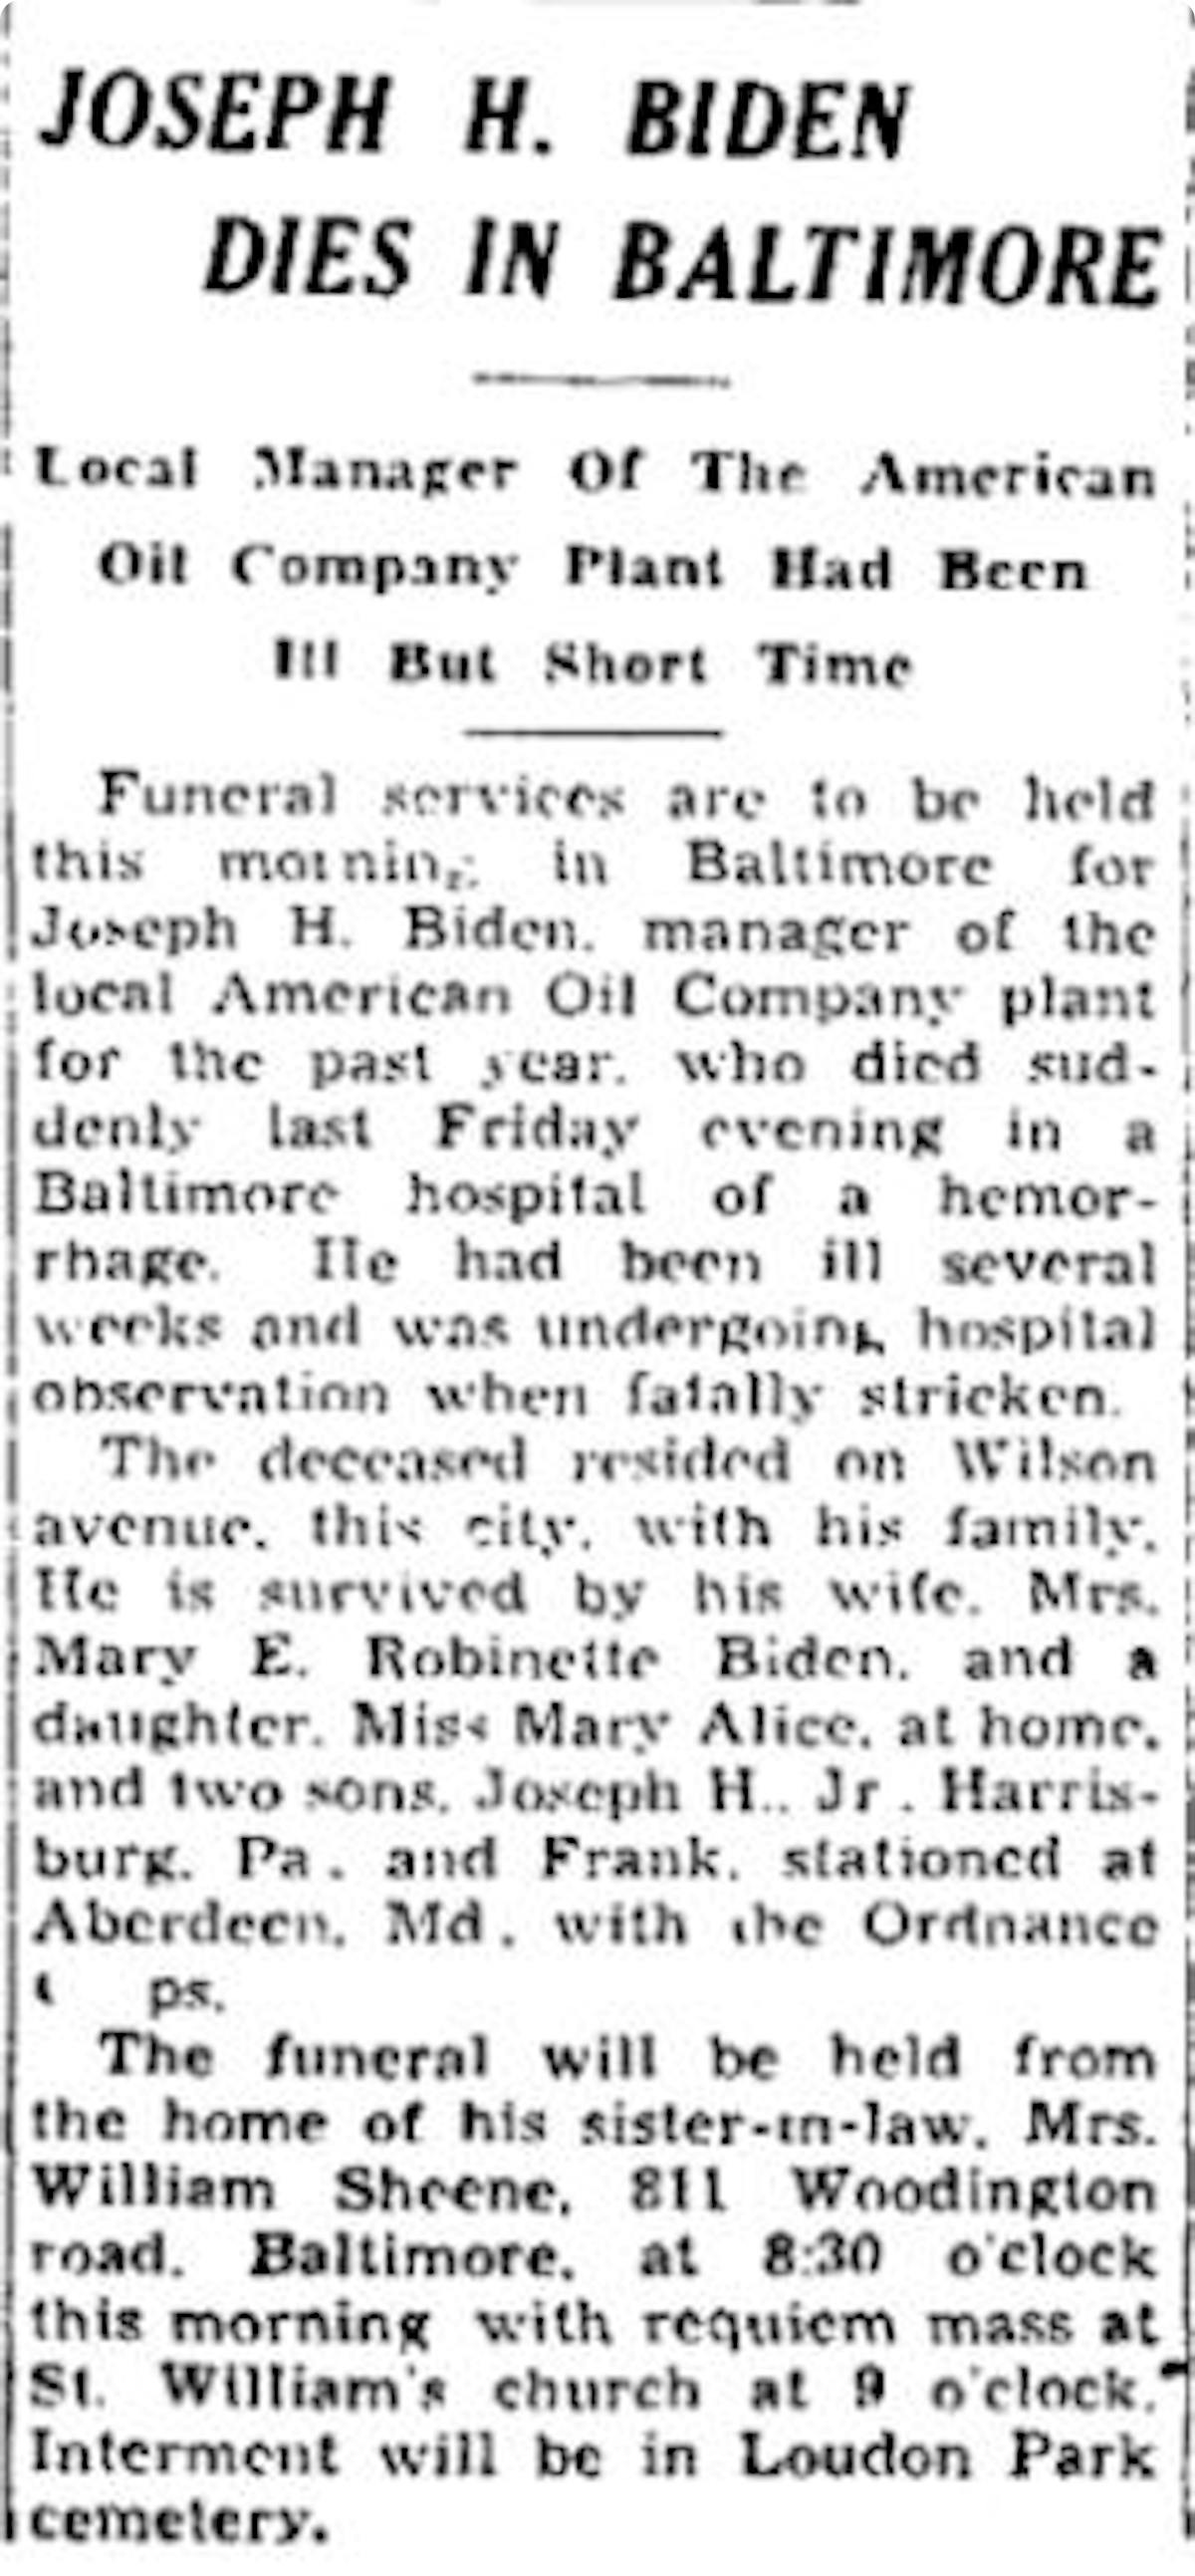 Joe Biden's grandfather's obituary